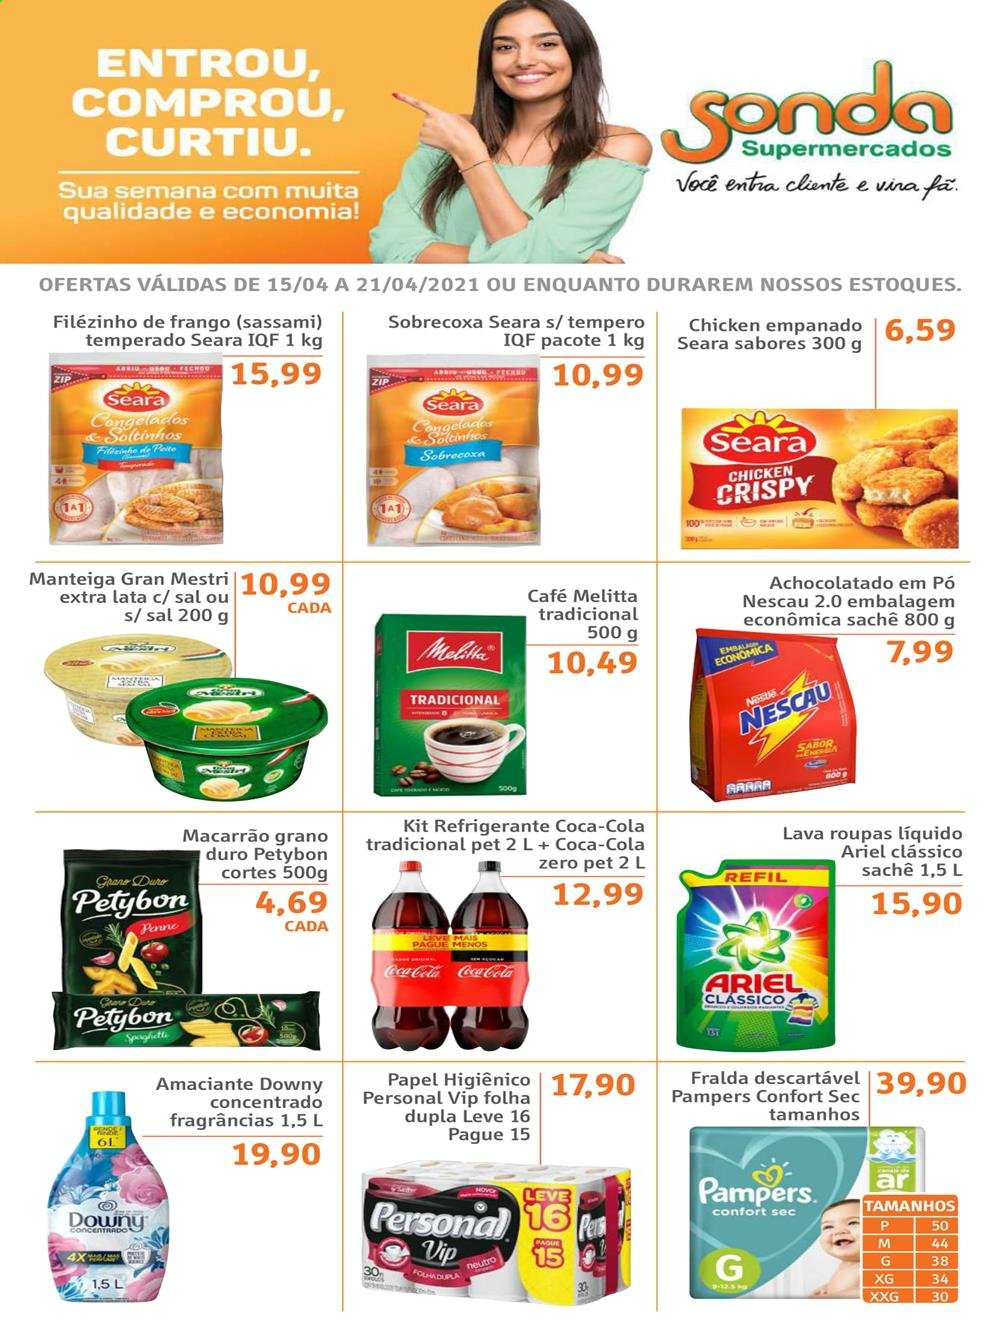 Encarte Sonda Supermercados  - 15.04.2021 - 21.04.2021.